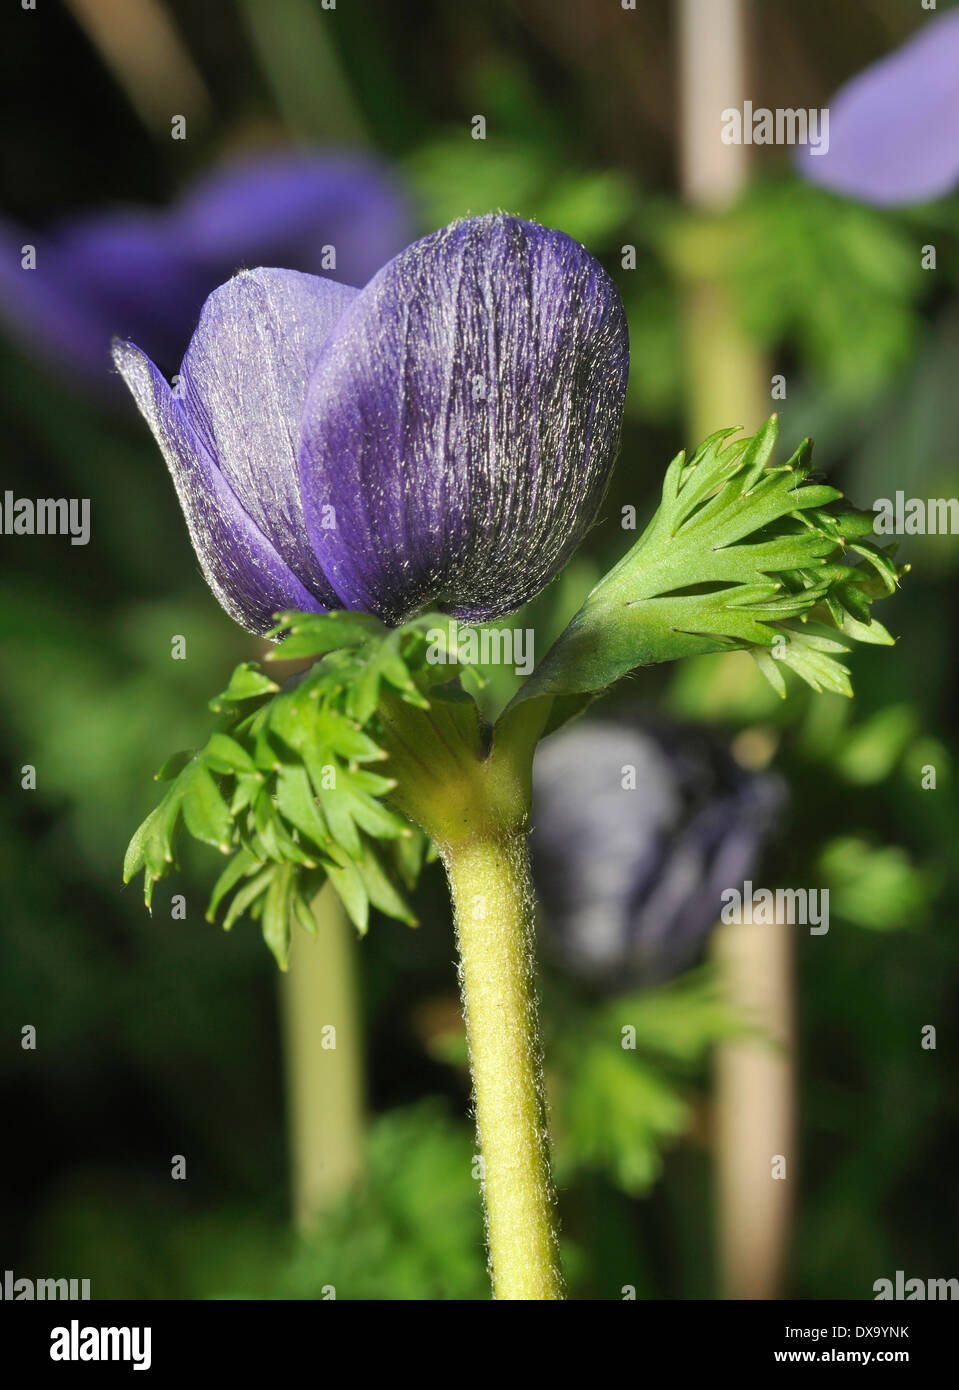 Blue Anemone cultivar Flower Bud Closeup Stock Photo